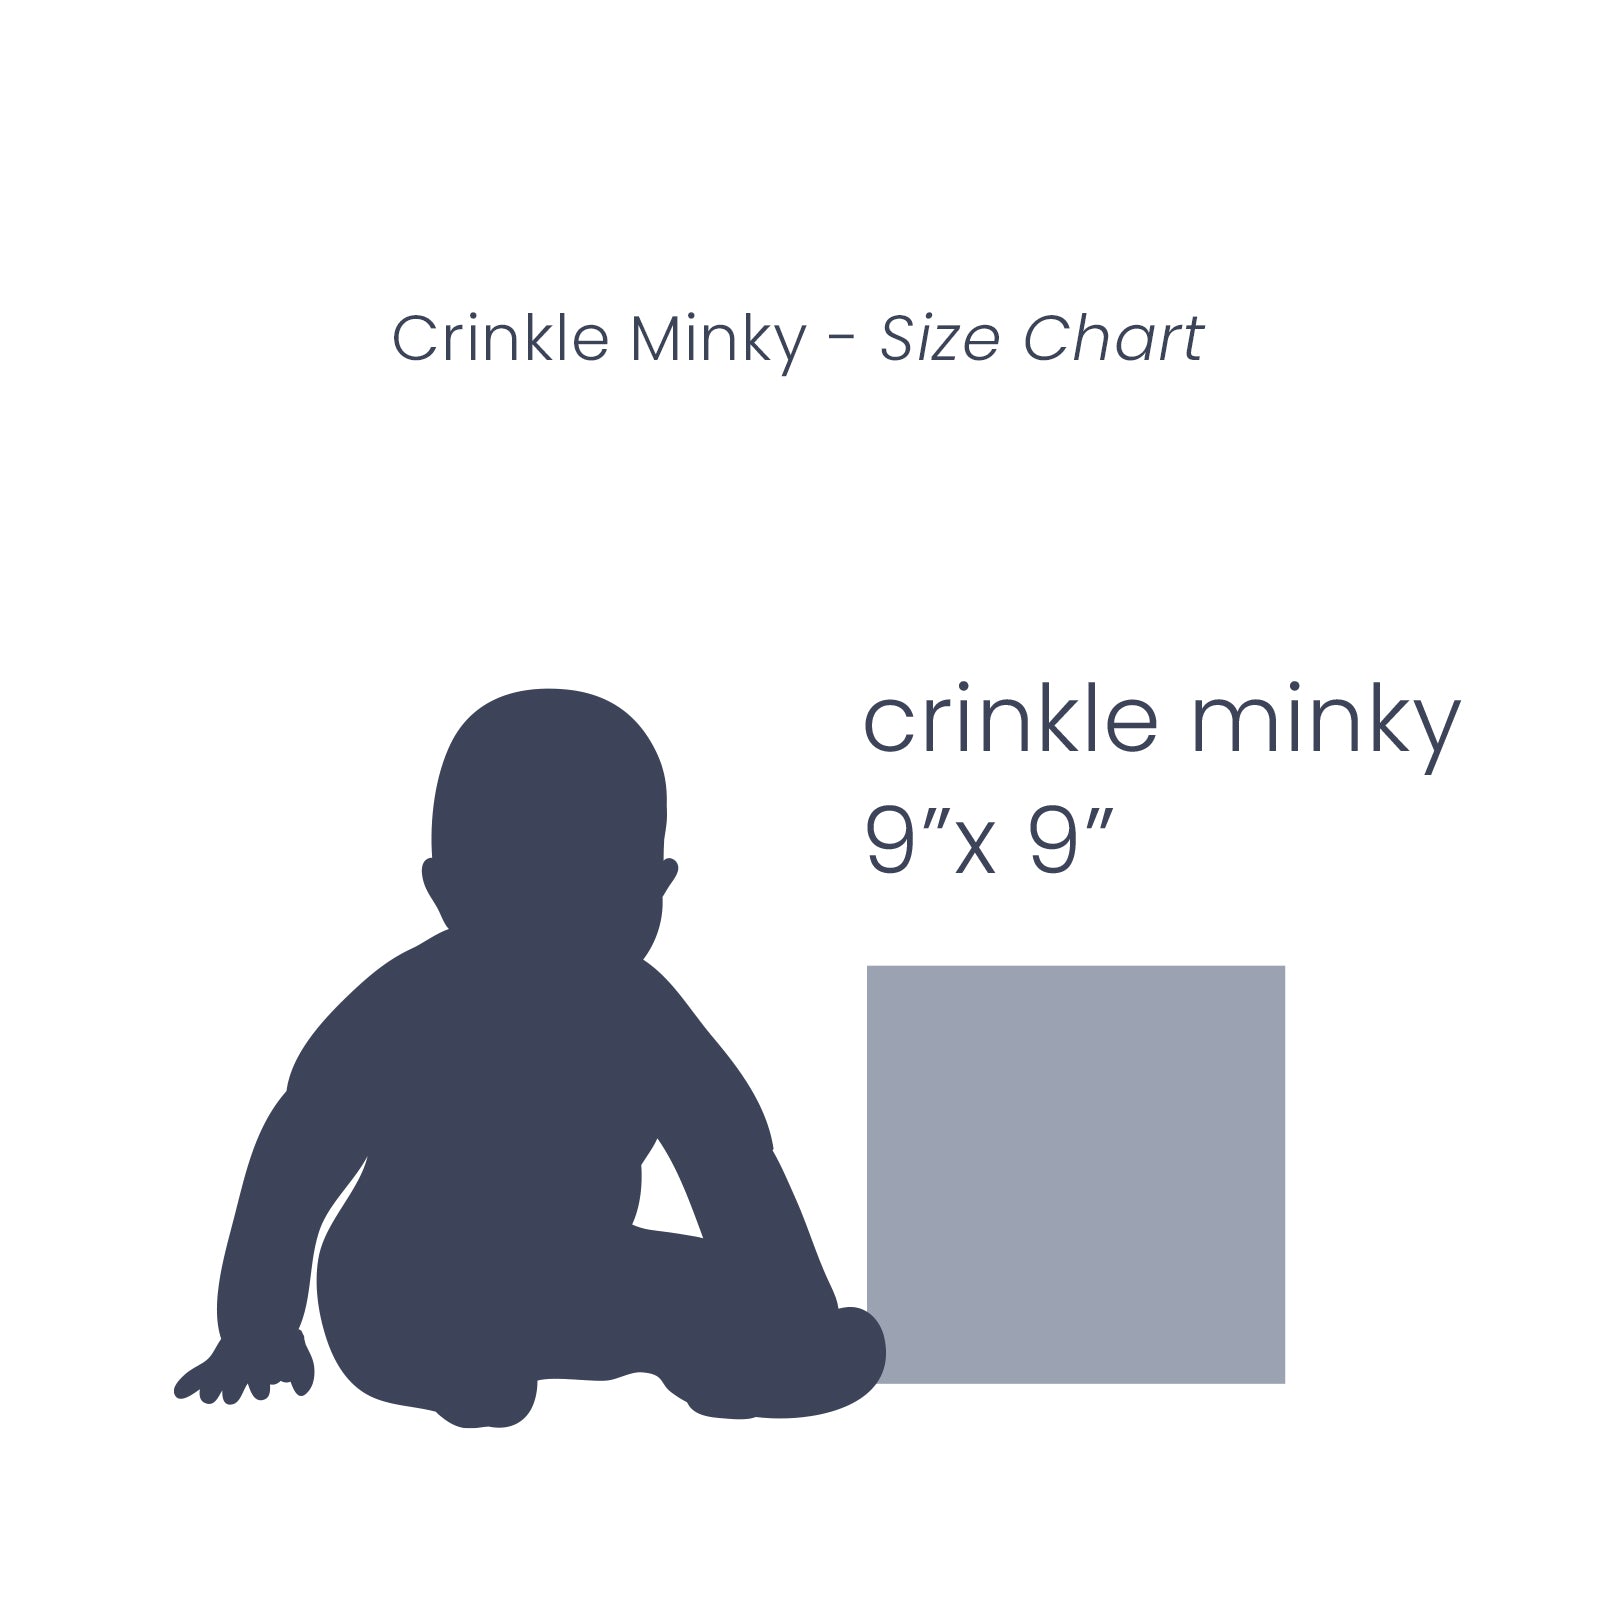 Crinkle Minky